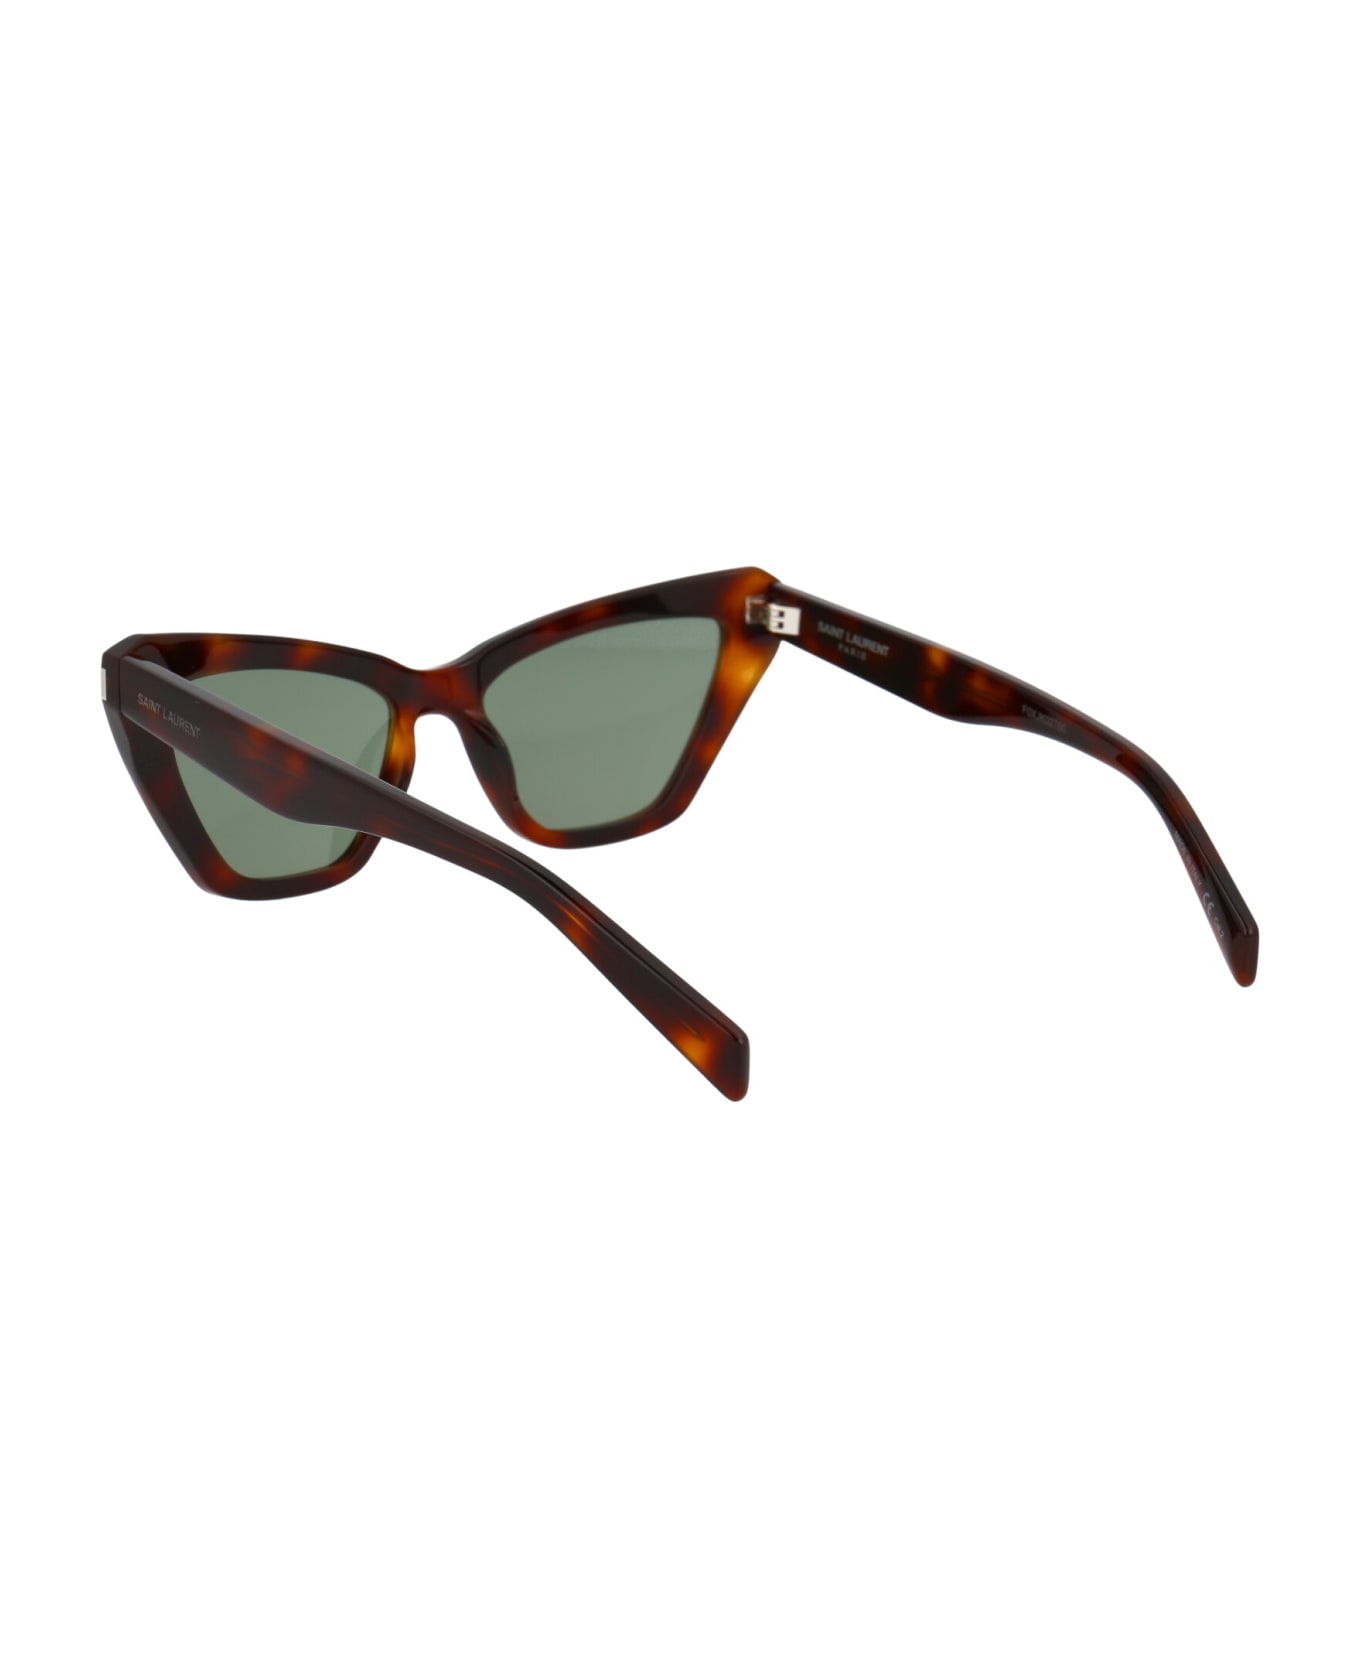 Saint Laurent Eyewear Sl 466 Sunglasses - 002 HAVANA HAVANA GREEN